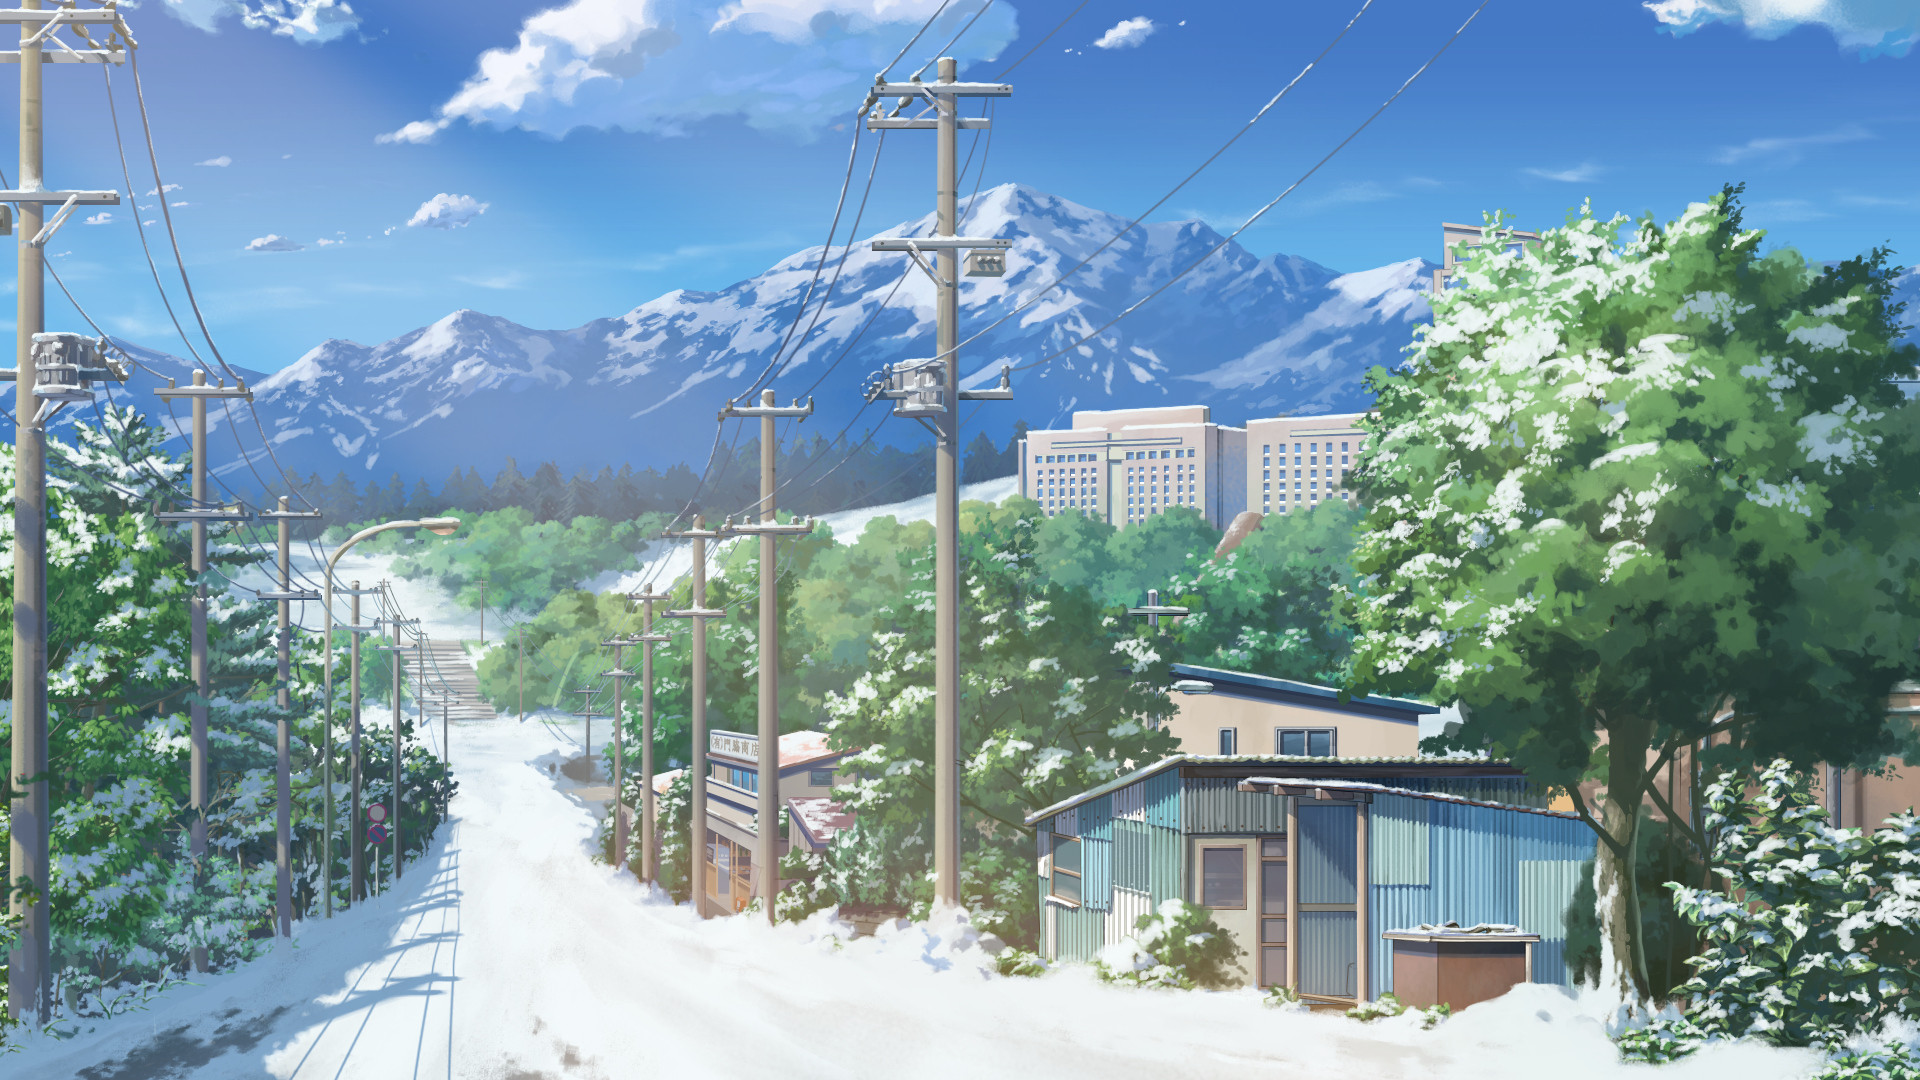 1920x1080 Anime Japan Cityscape wallpaper